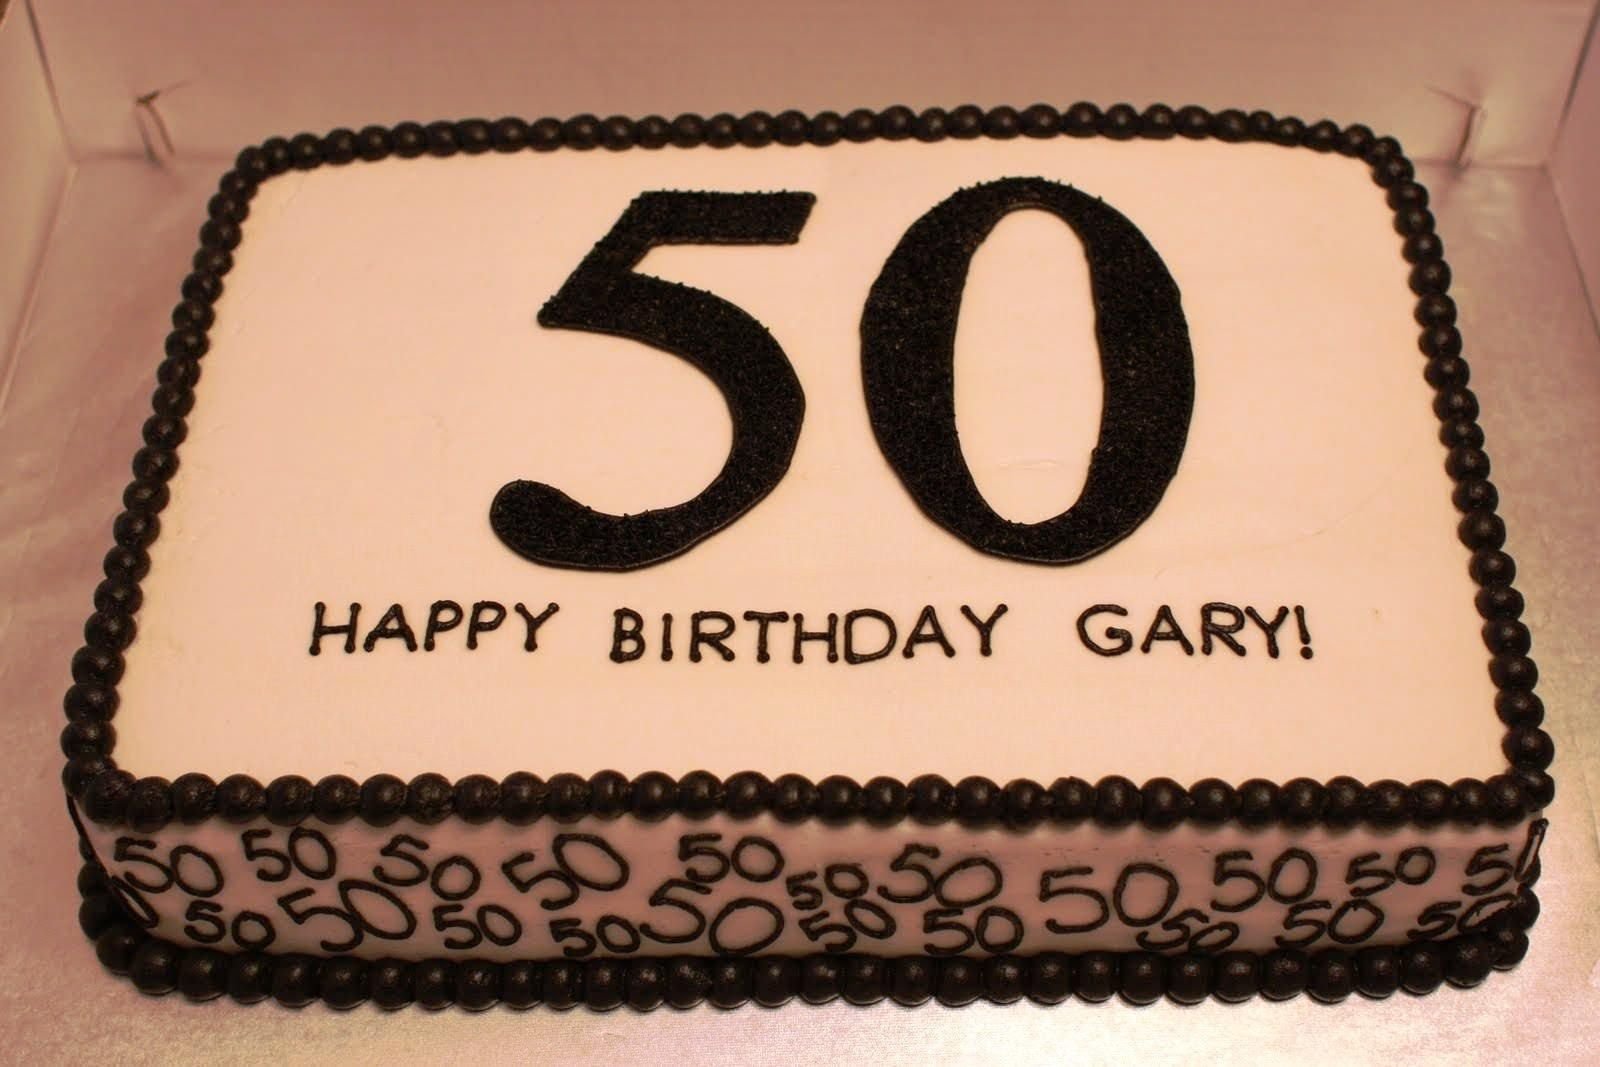 50 лет мужчине 18. Торт на юбилей 50 лет мужчине. Торт на день рождения мужчине 50 лет. Украшение торта для мужчины 50 лет. Торт на юбилей 50 лет мужу.